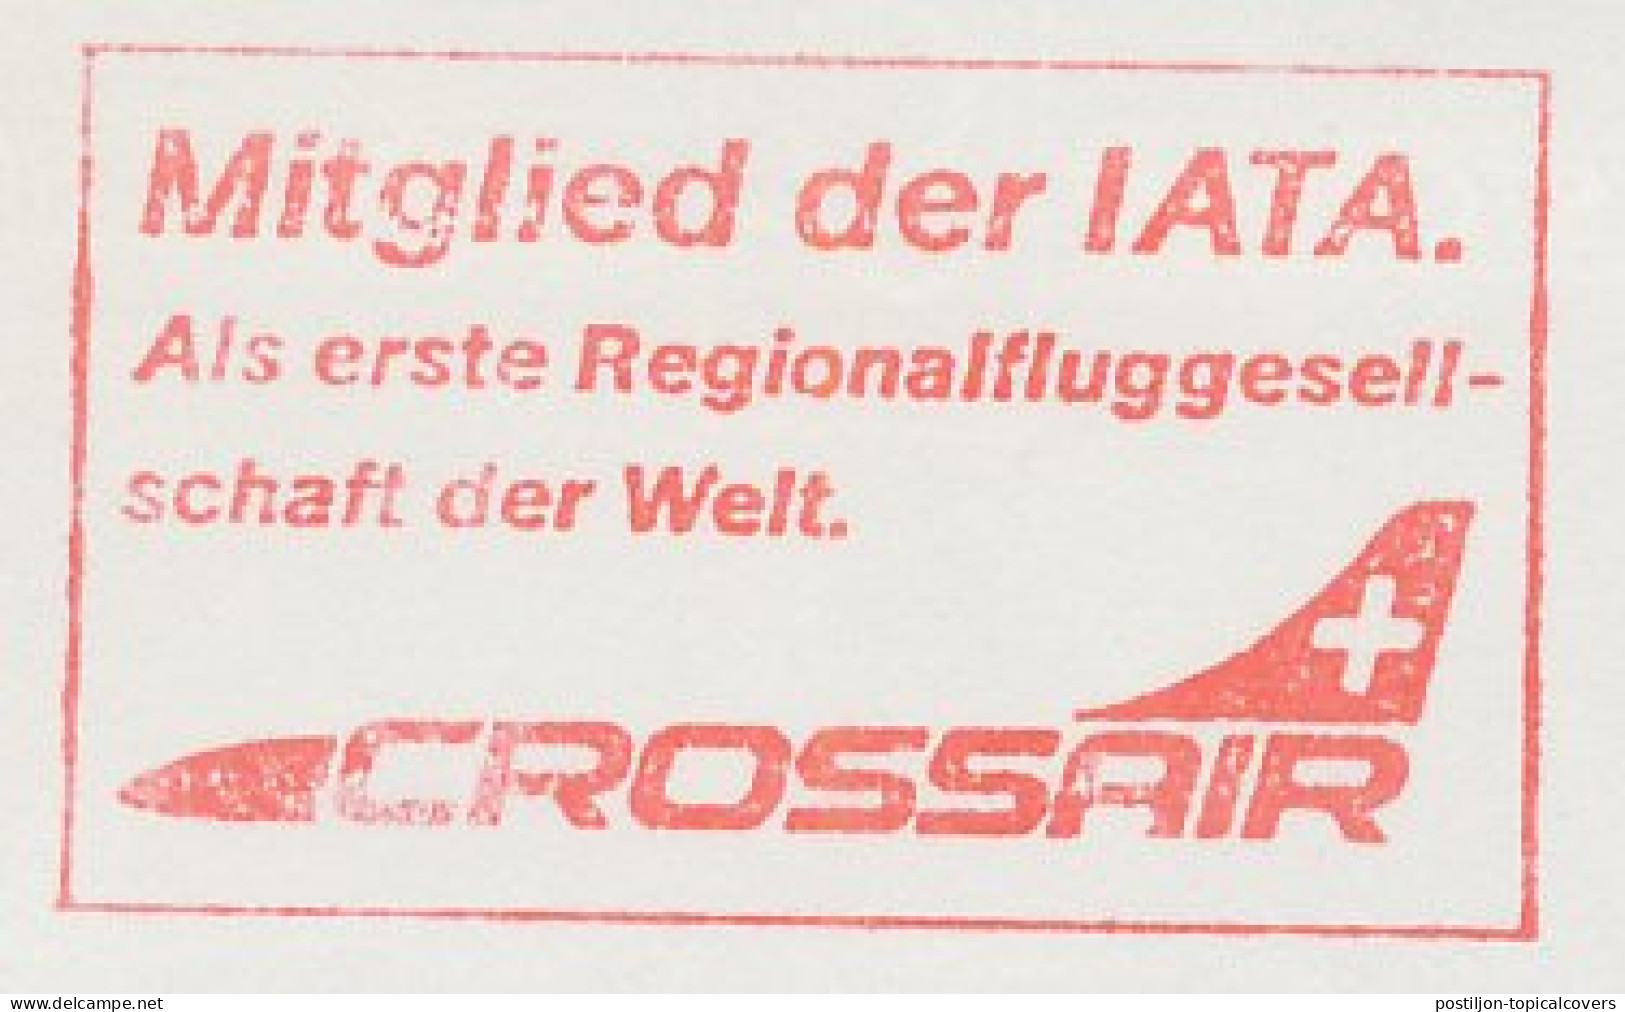 Meter Cut Switzerland 1986 Airplane - Crossair - Avions